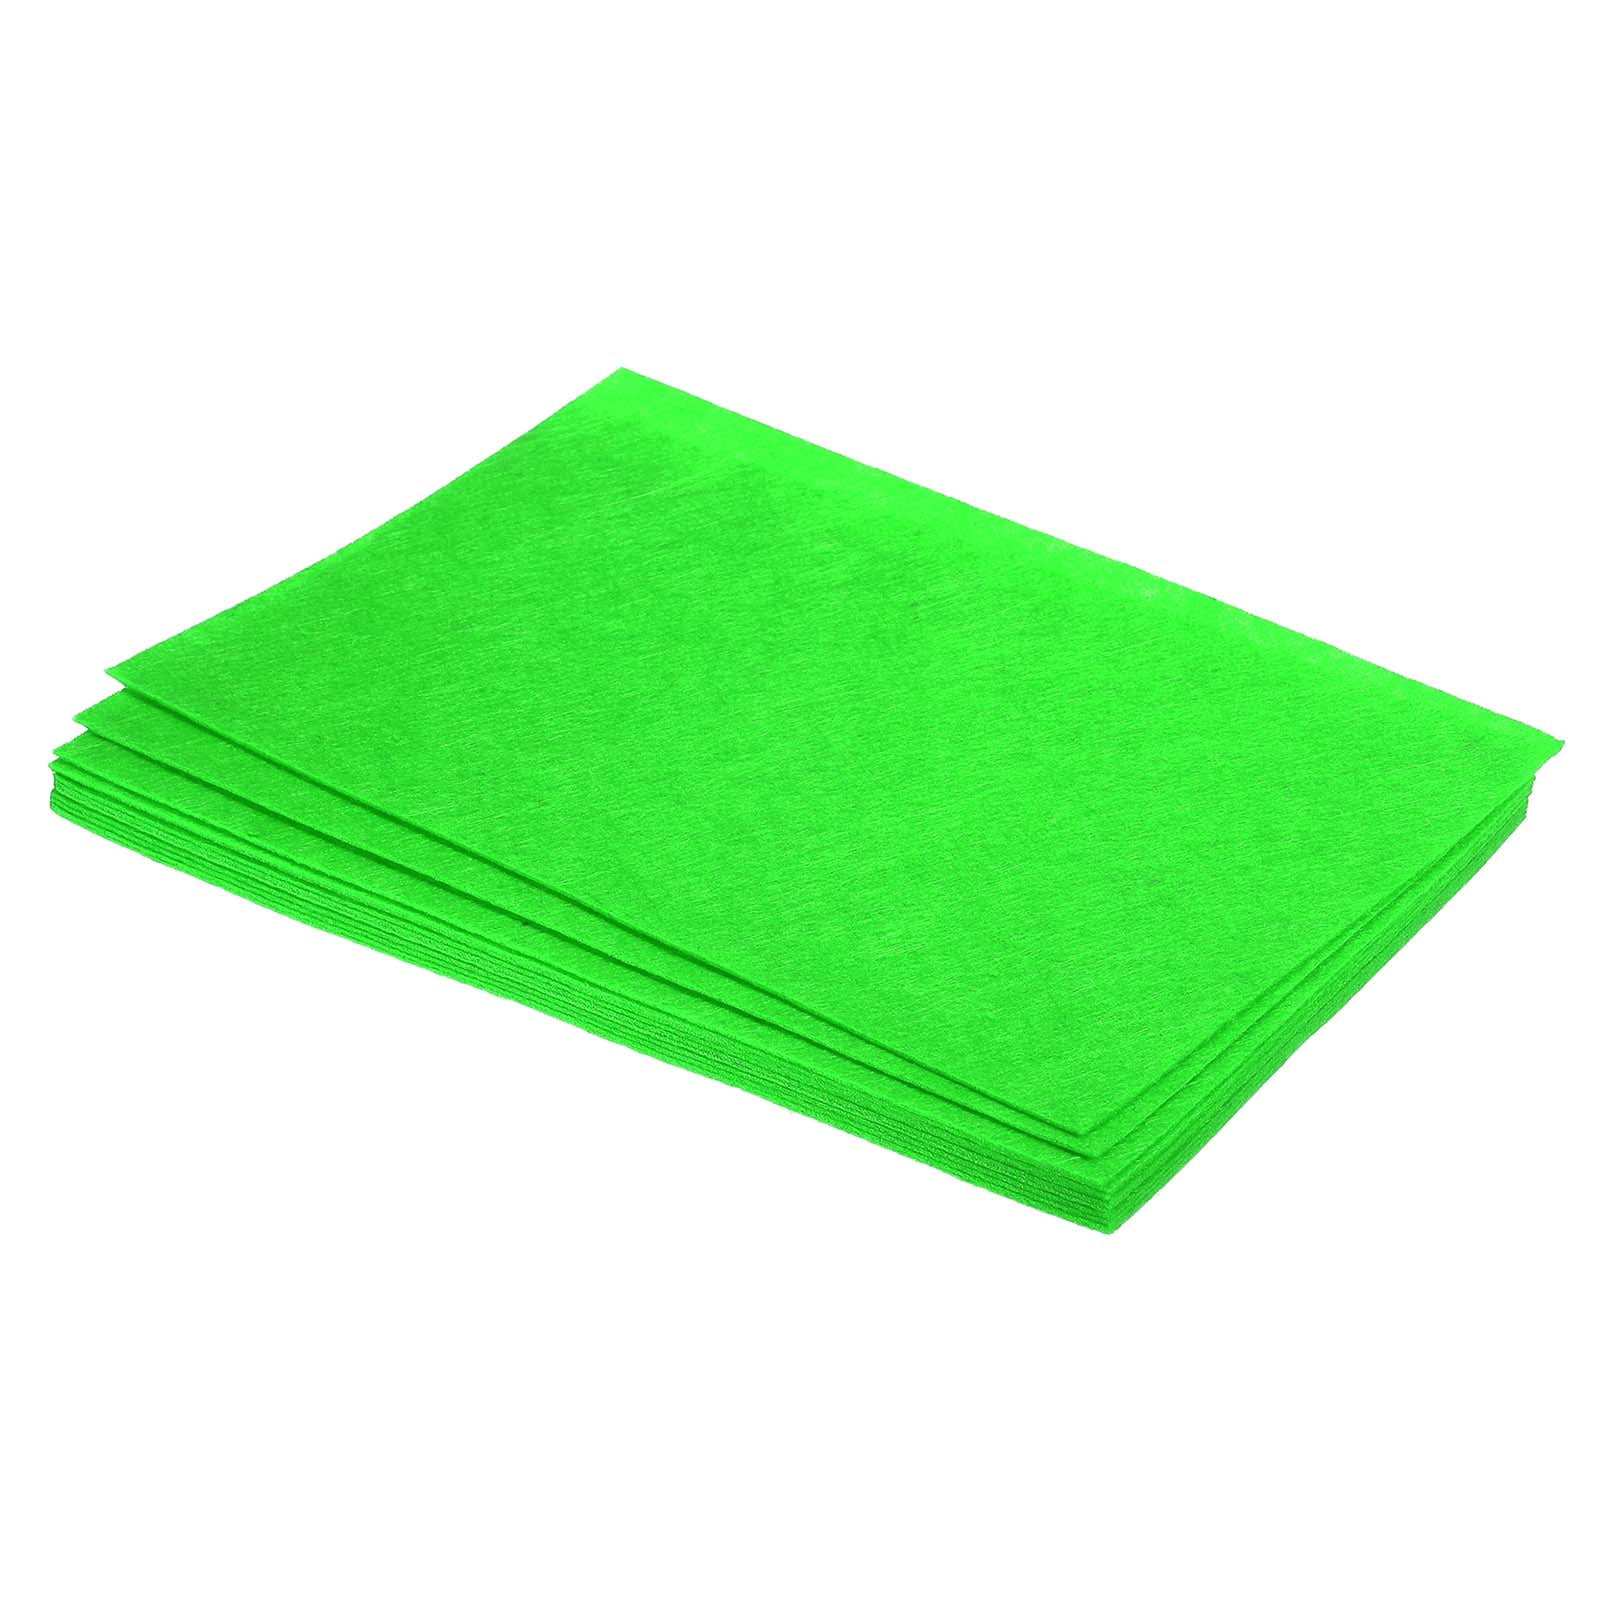 Eppingwin 60 Pcs Fruit Green Felt Sheets, 4x4 Felt Squares,Soft Felt for Crafts, Felt Fabric Sheets for DIY Patchwork